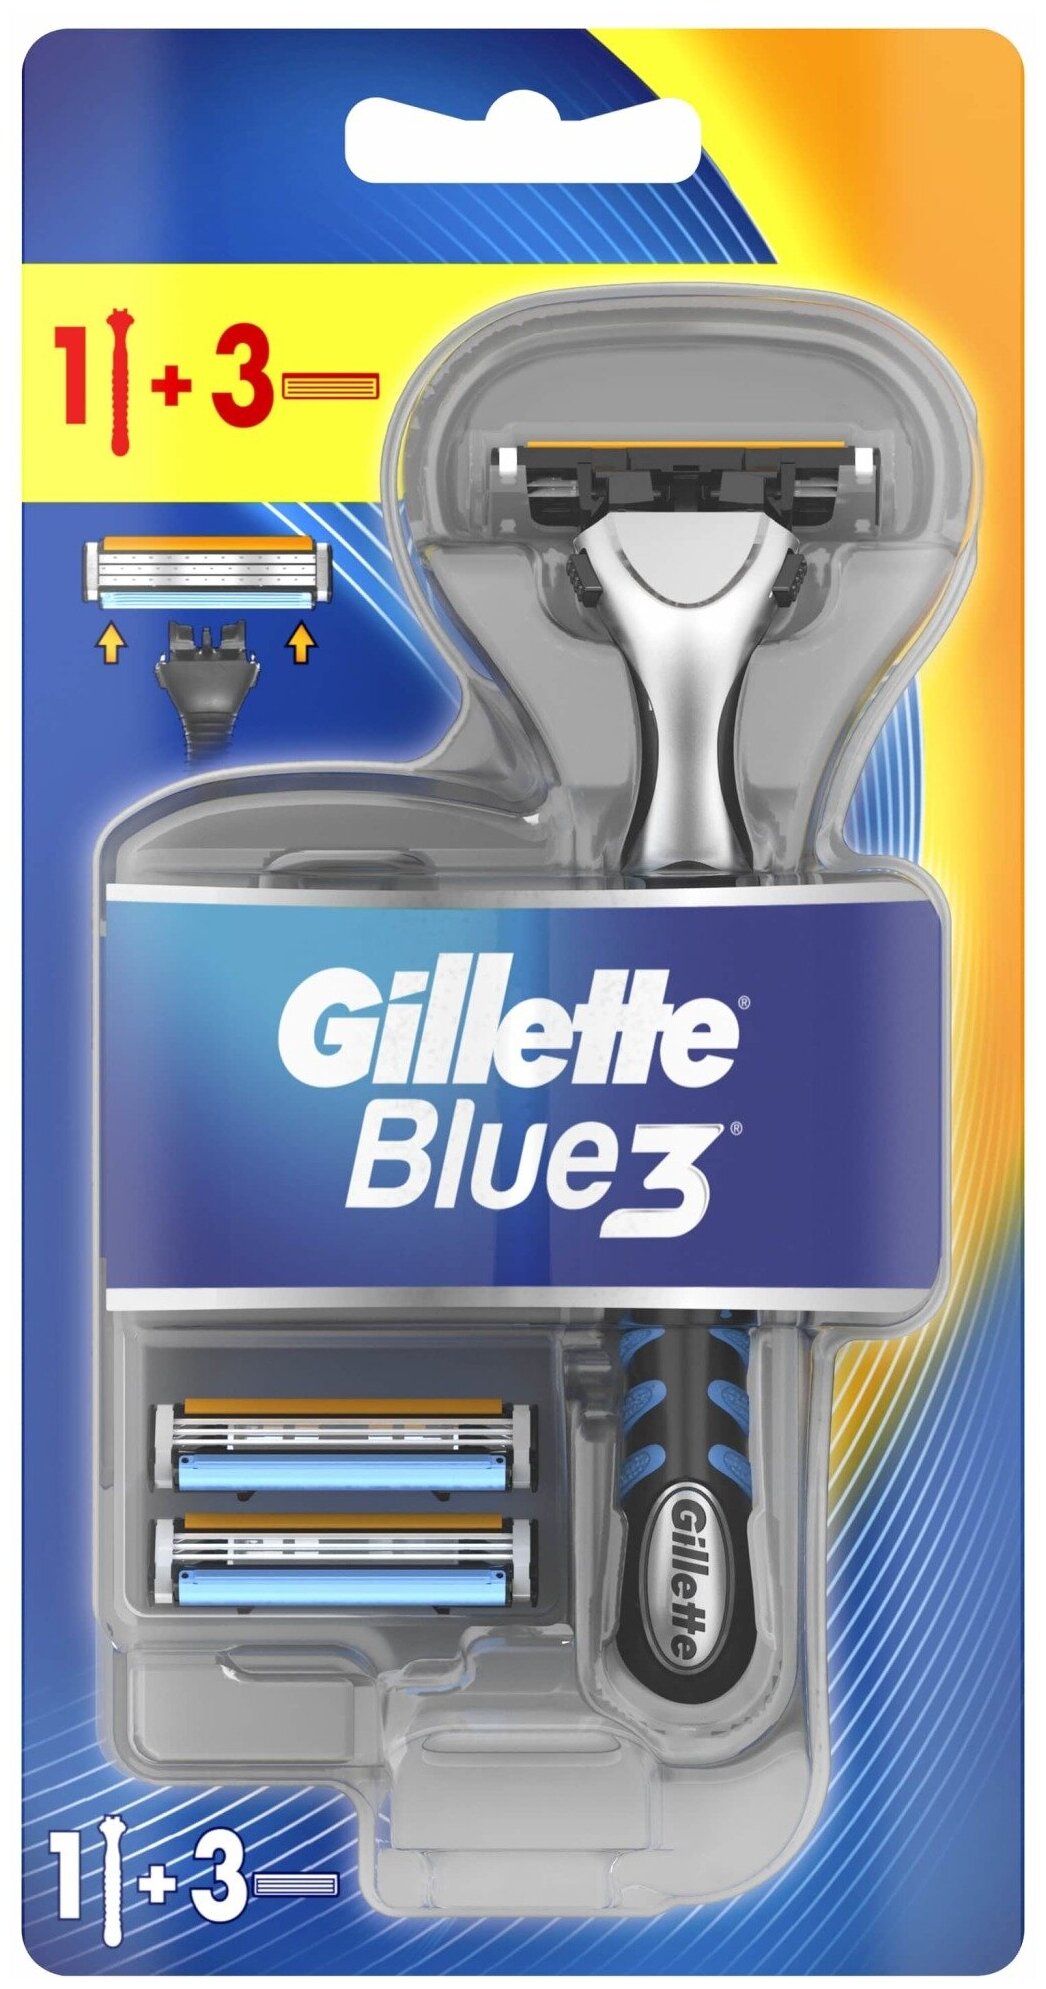 Gillette Мужская Бритва Blue3, 3 кассеты, с 3 лезвиями, плавающая головка